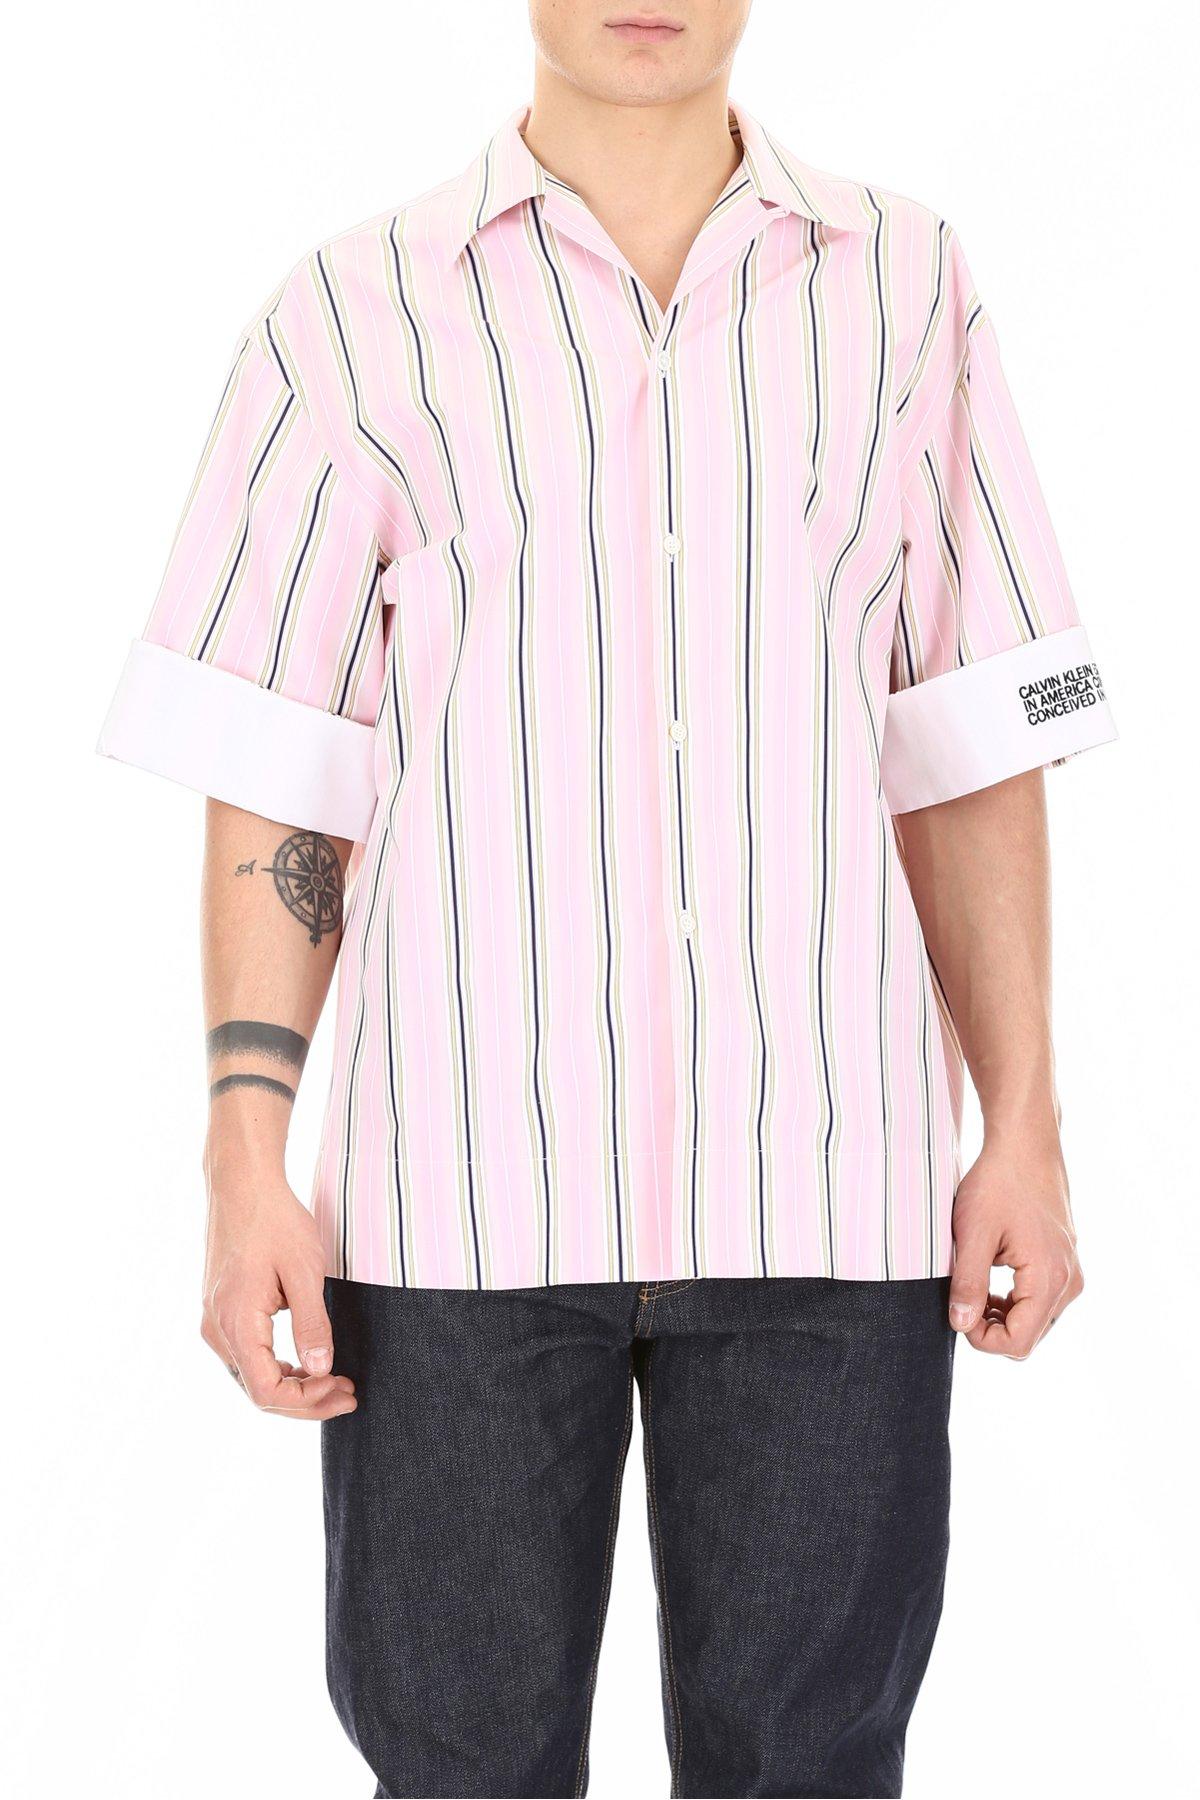 CALVIN KLEIN 205W39NYC Cotton Striped Shirt in Pink for Men - Lyst